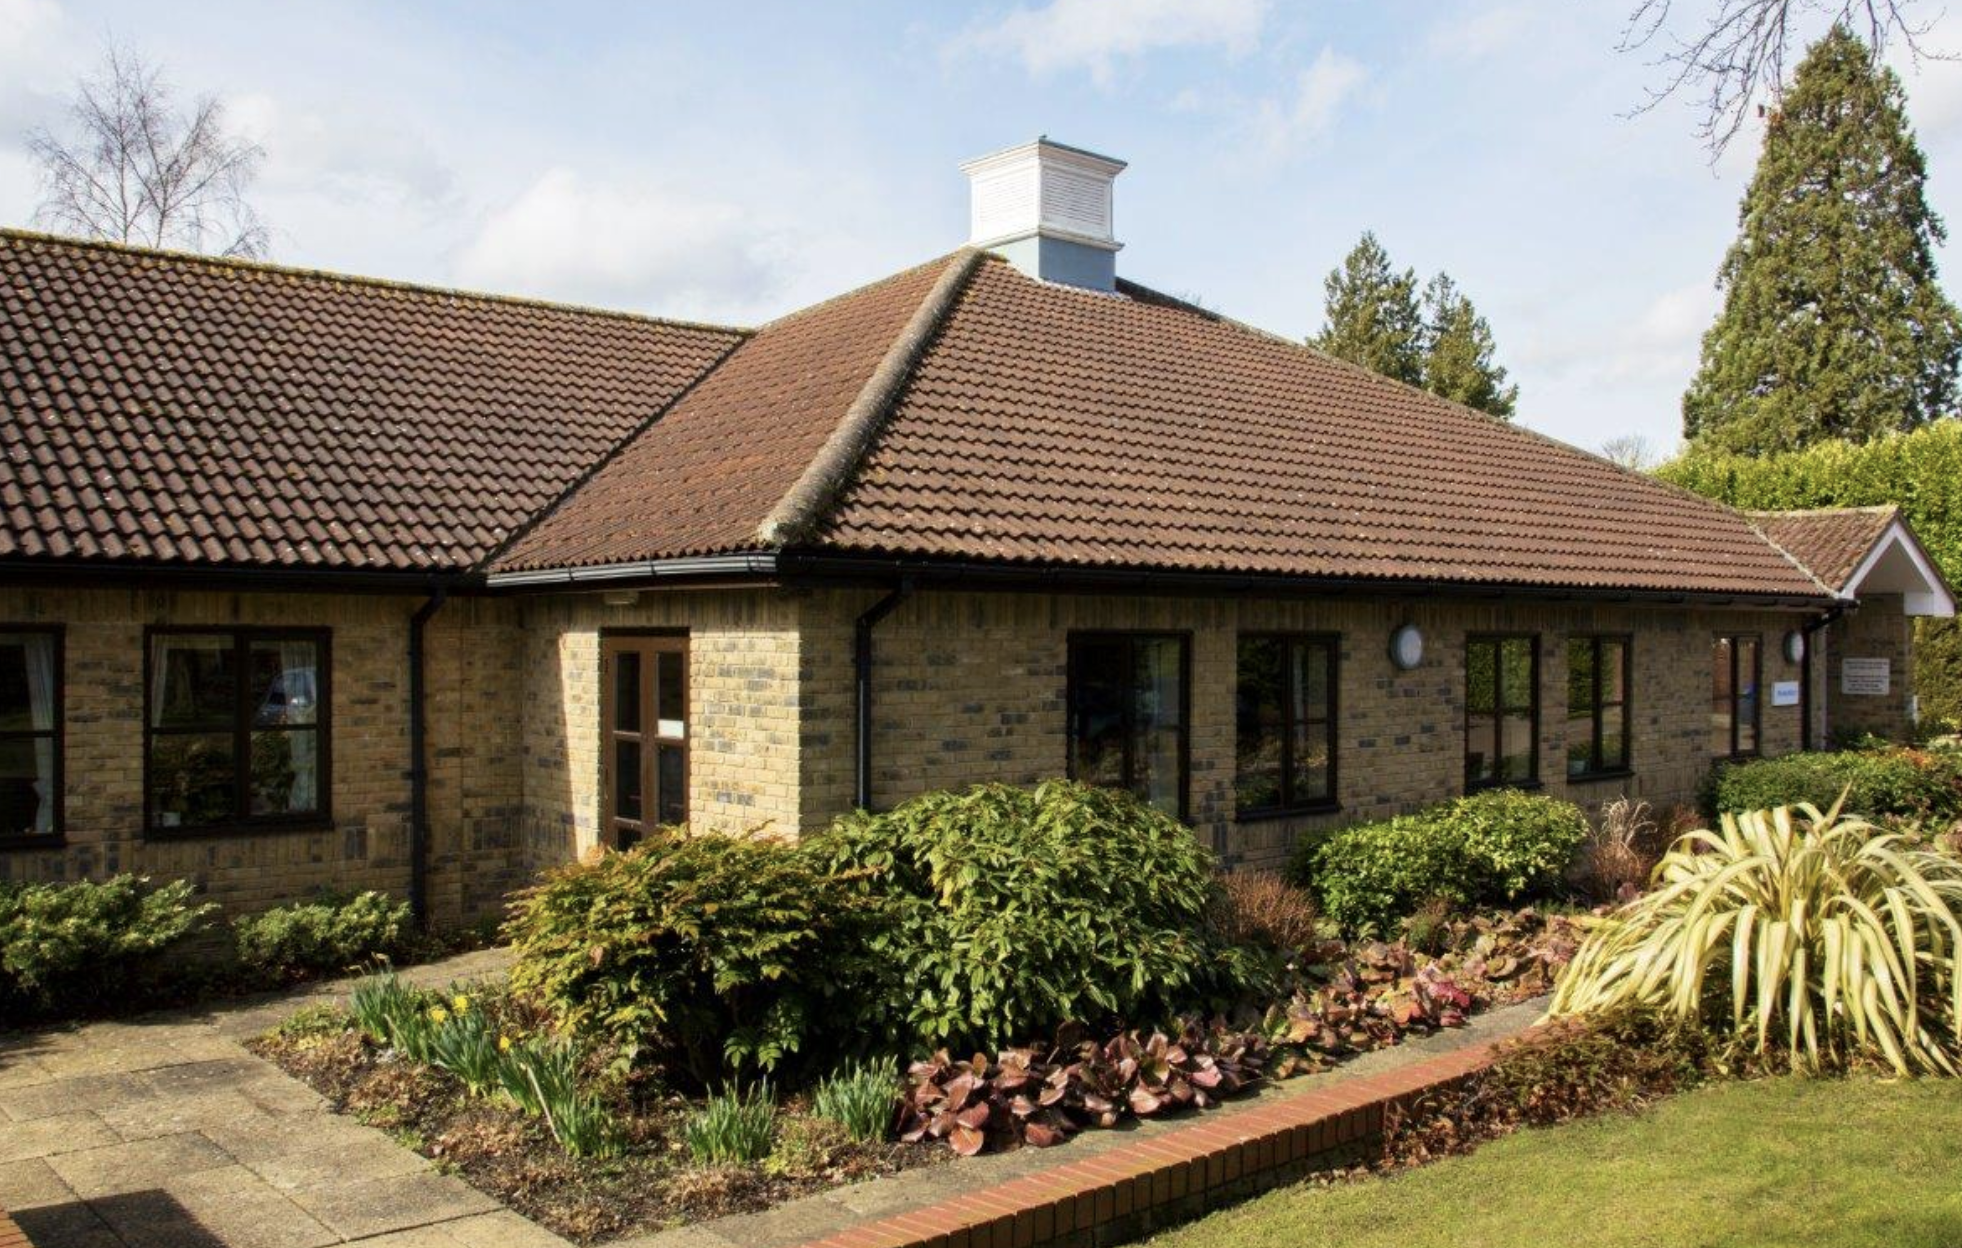 Exterior of Premier Court care home in Bishop's Stortford, Hertfordshire